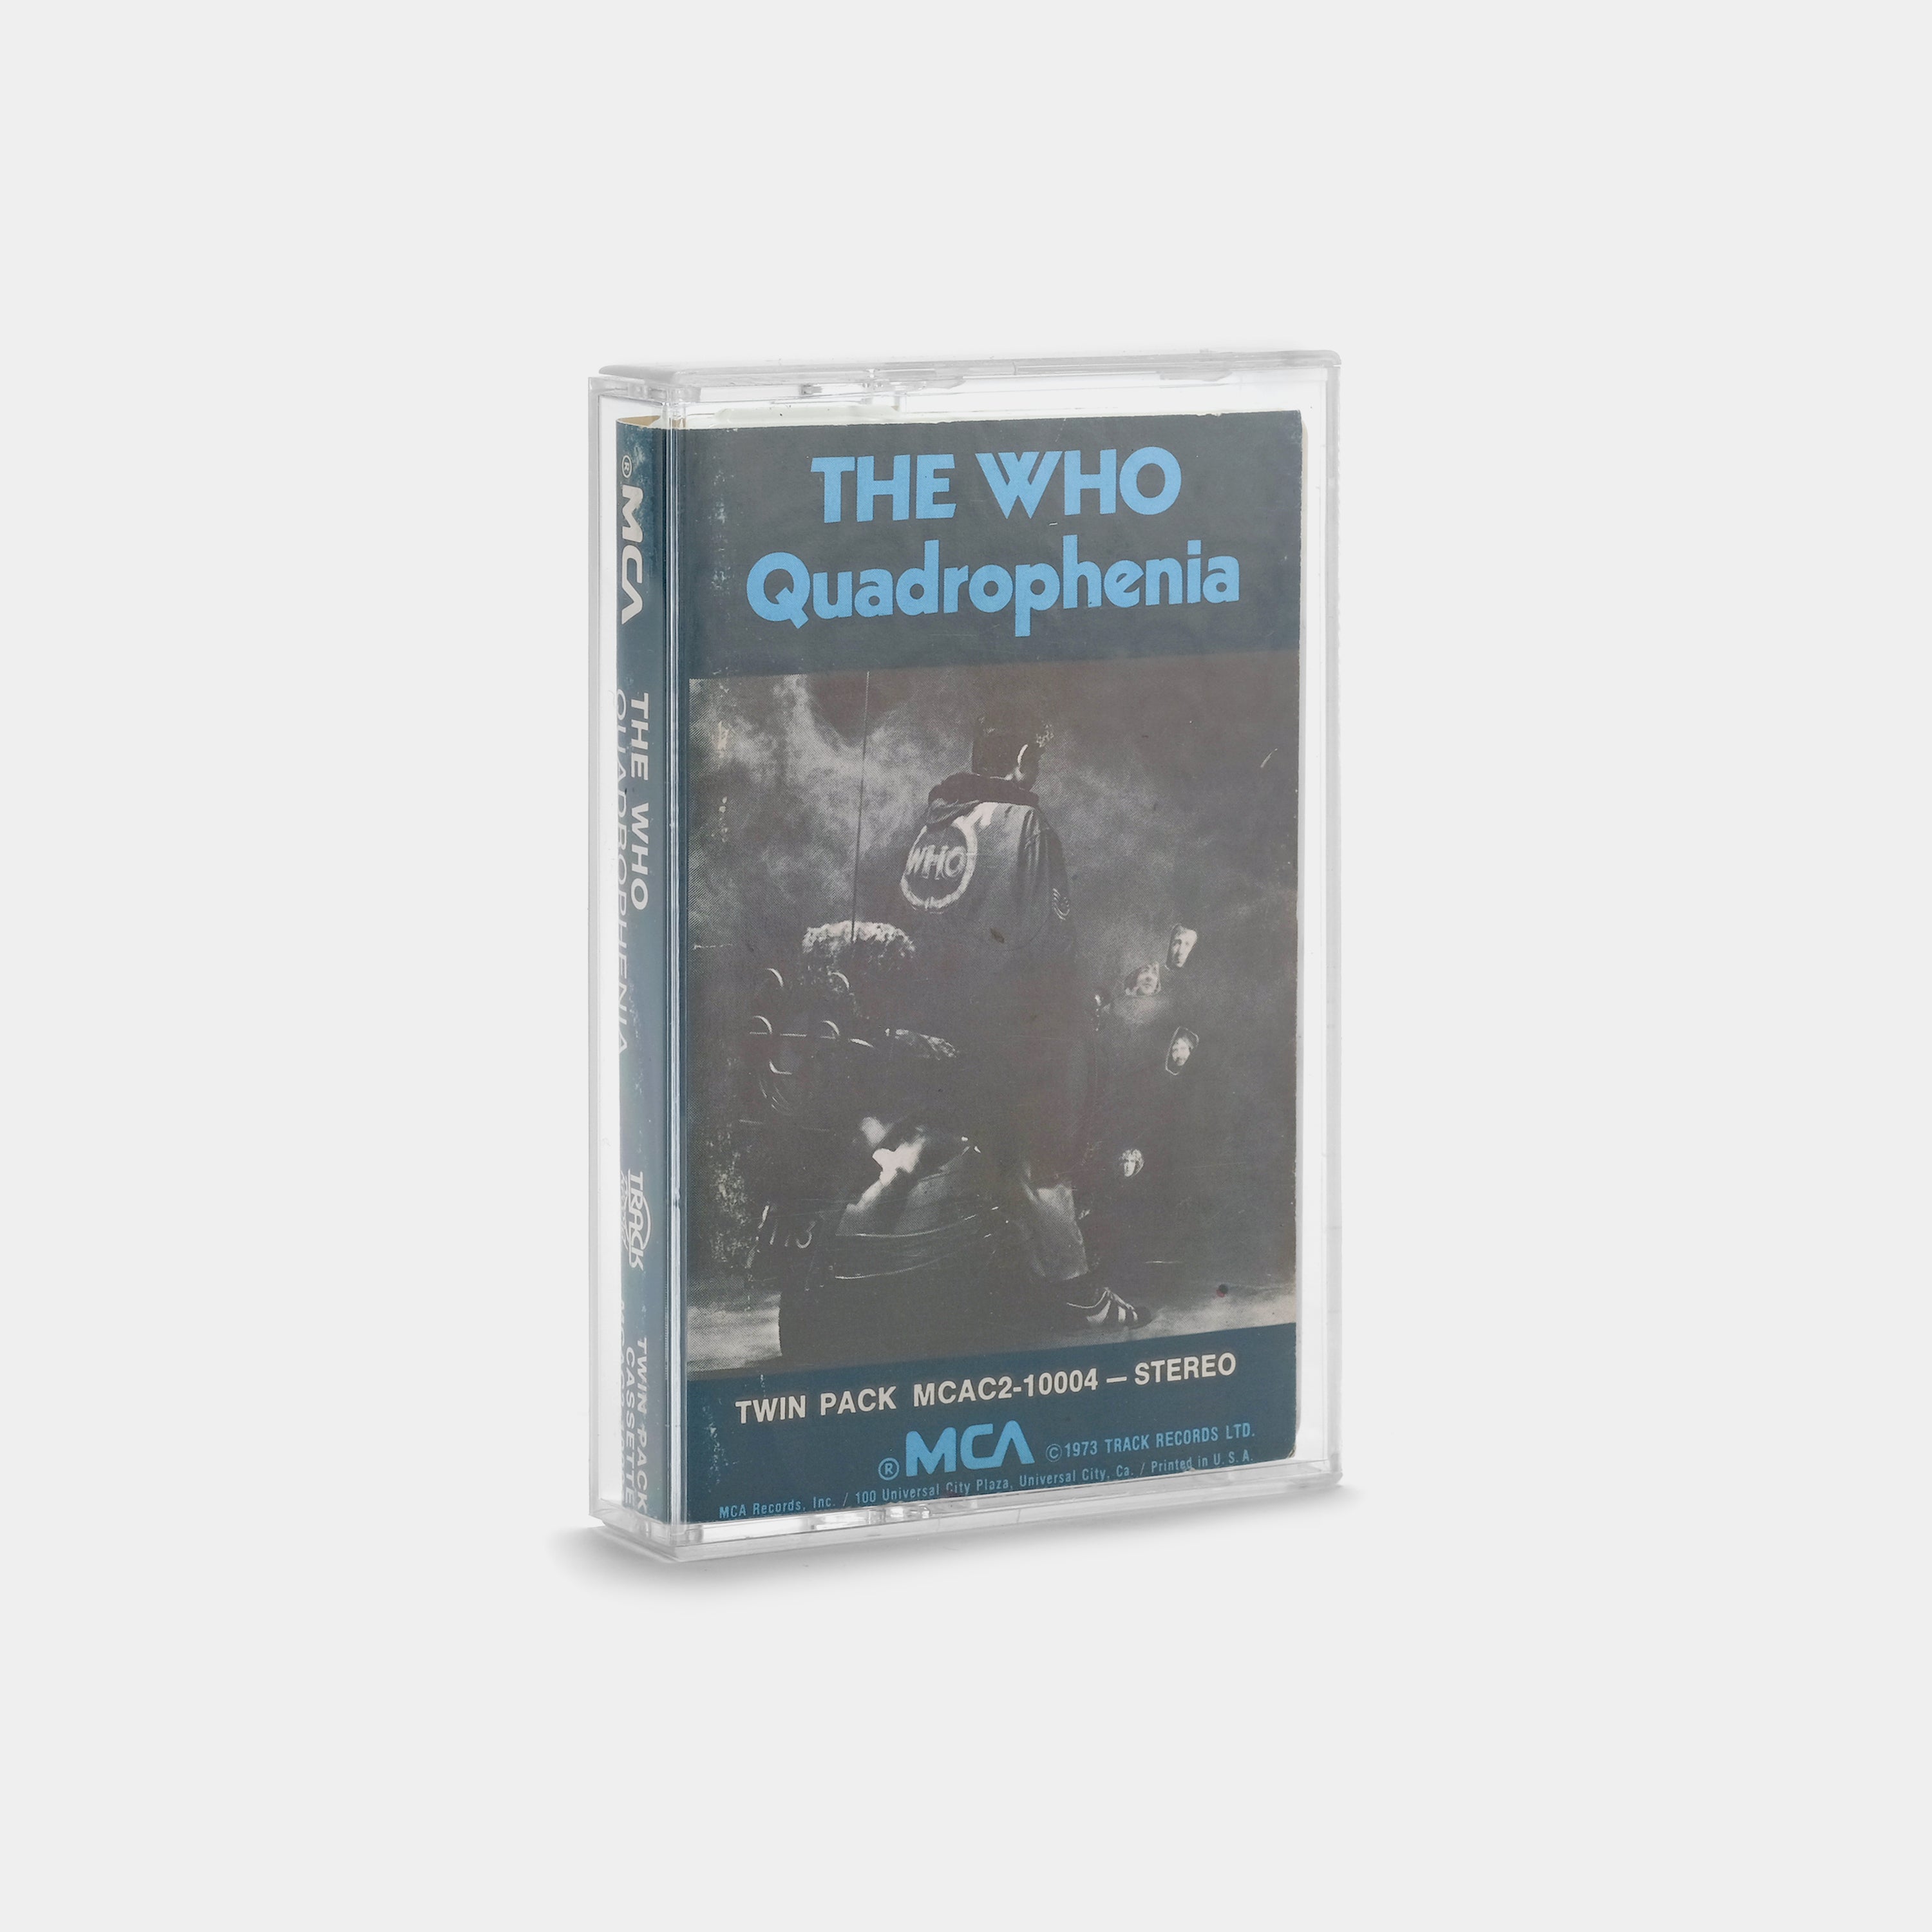 The Who - Quadrophenia Cassette Tape